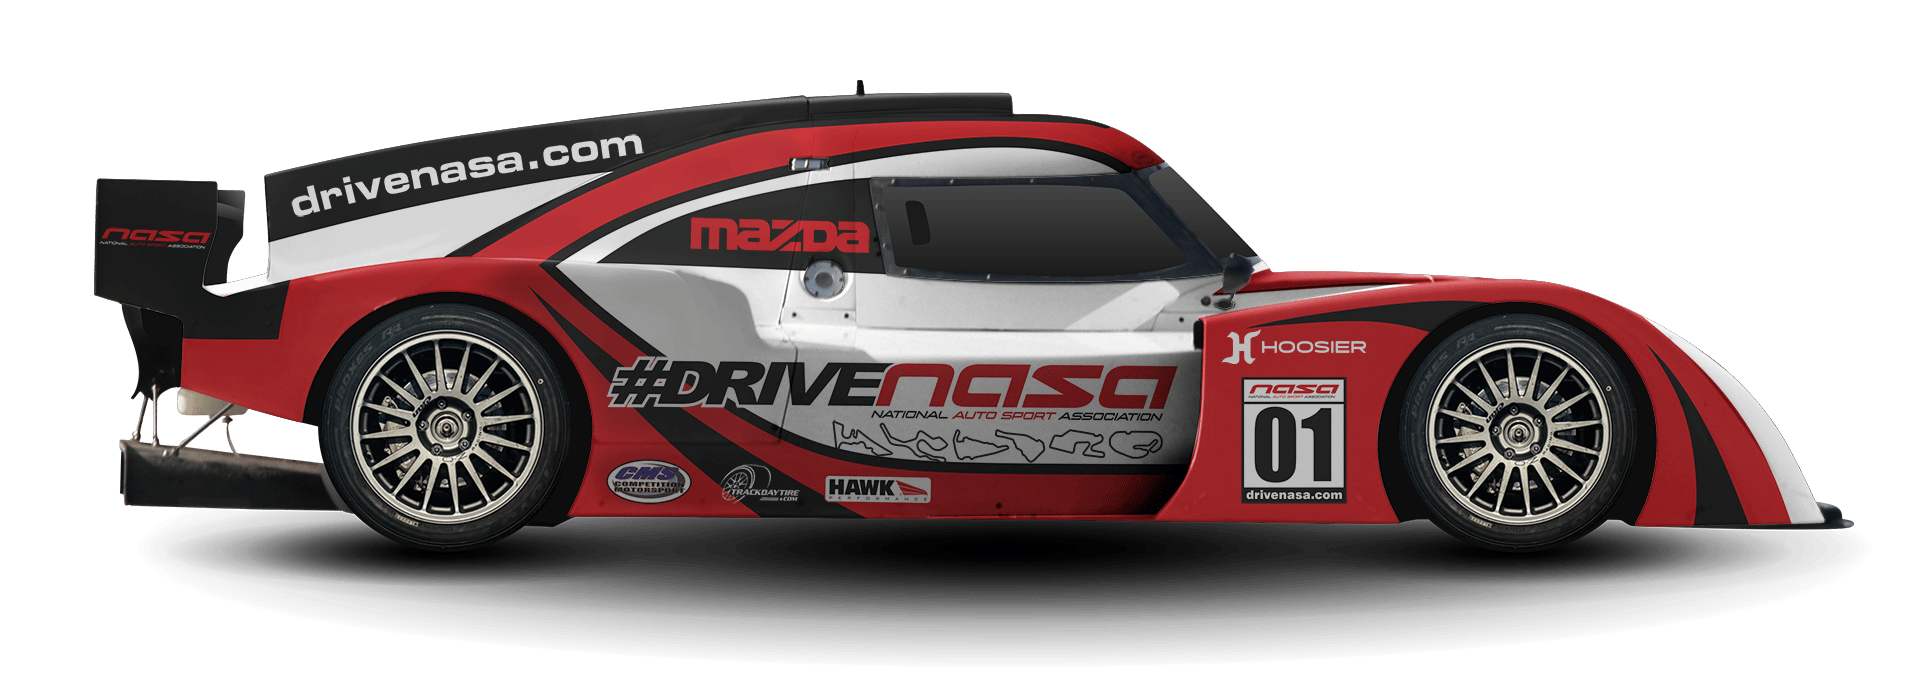 Road Racing - National Auto Sport Association